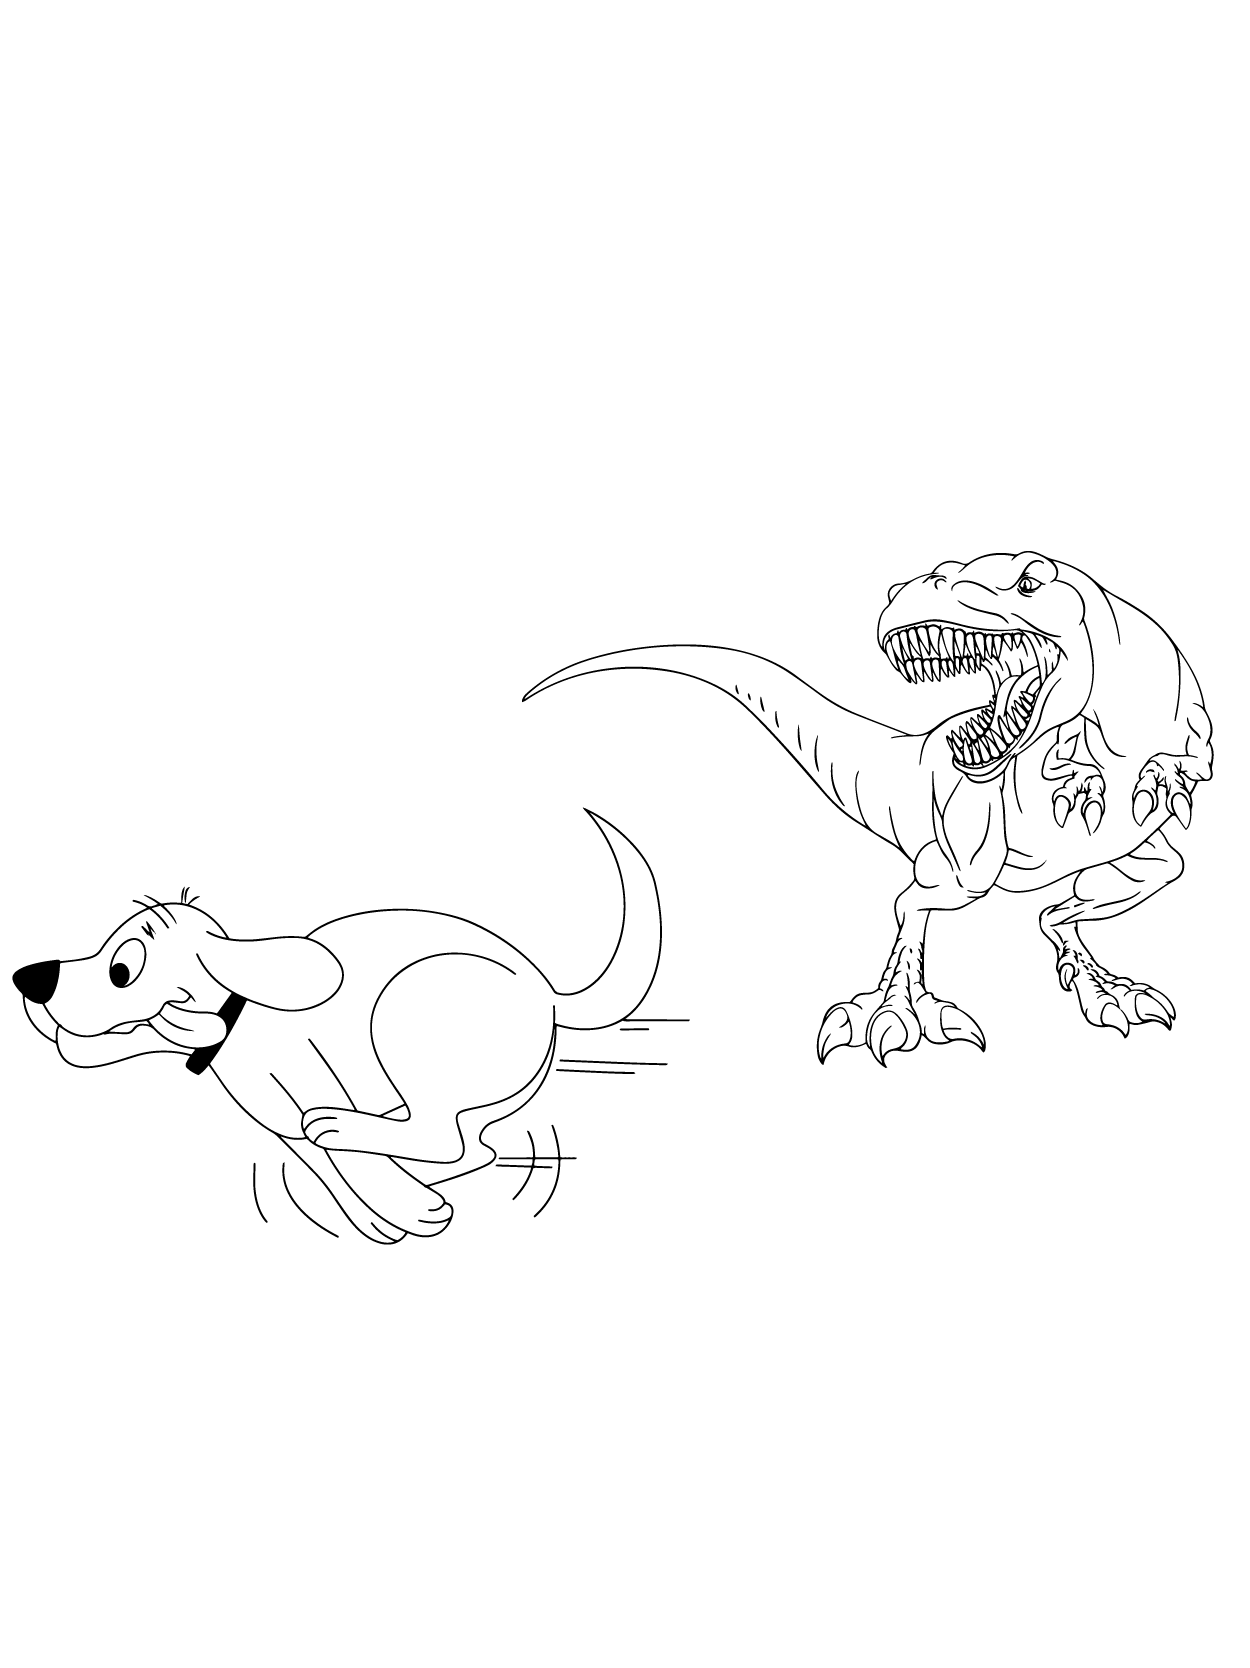 Clifford hat Angst vor Dinosaurier